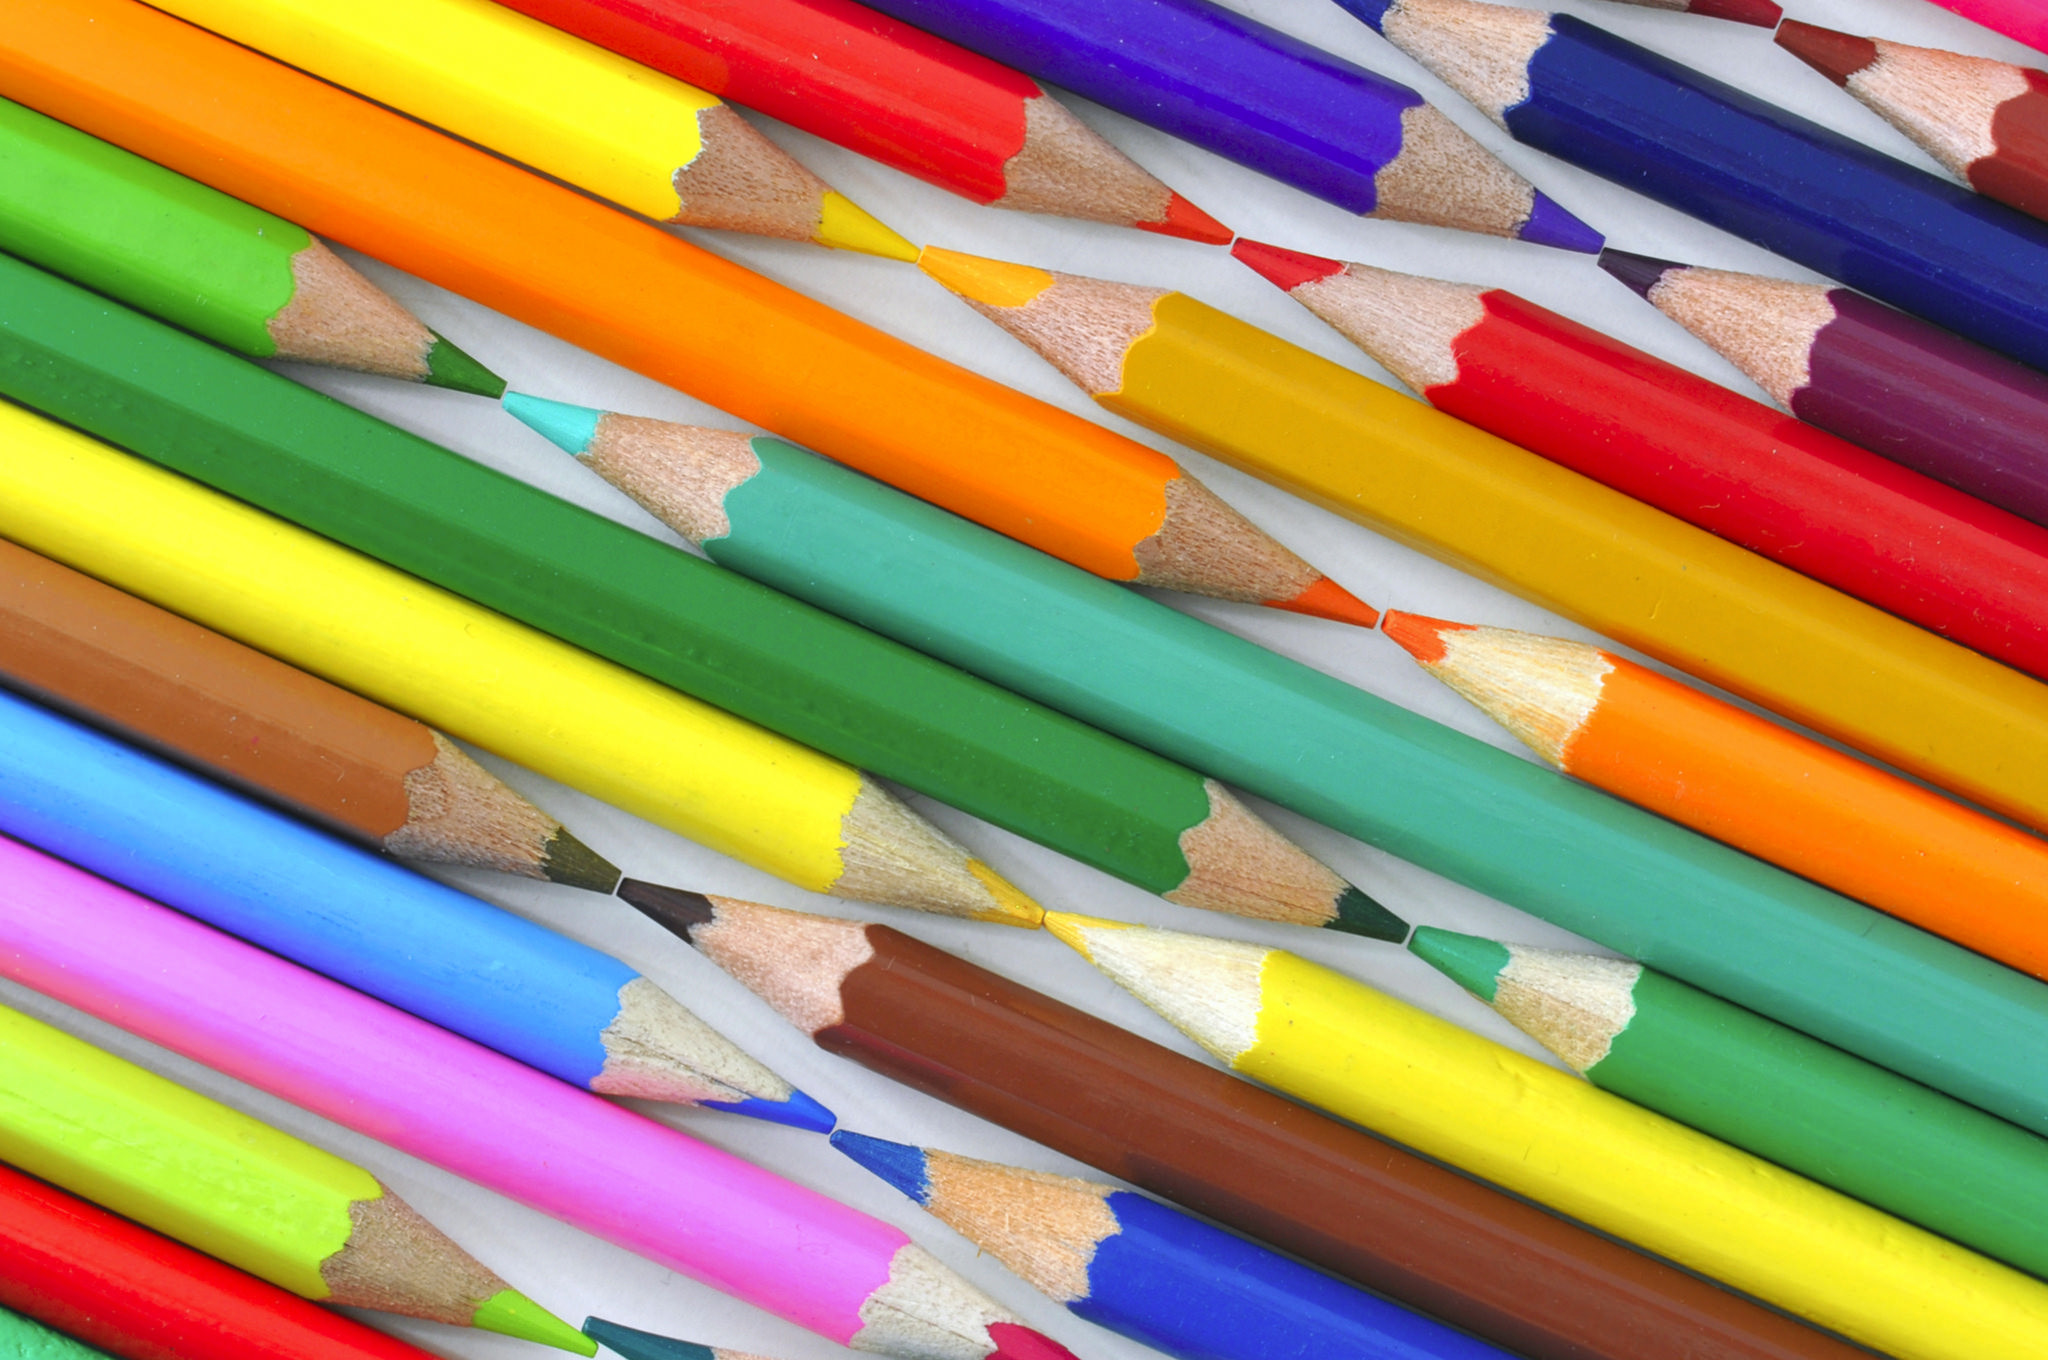 miscellanea, miscellaneous, colored pencils, pencils, rod, colour pencils, kernel cell phone wallpapers